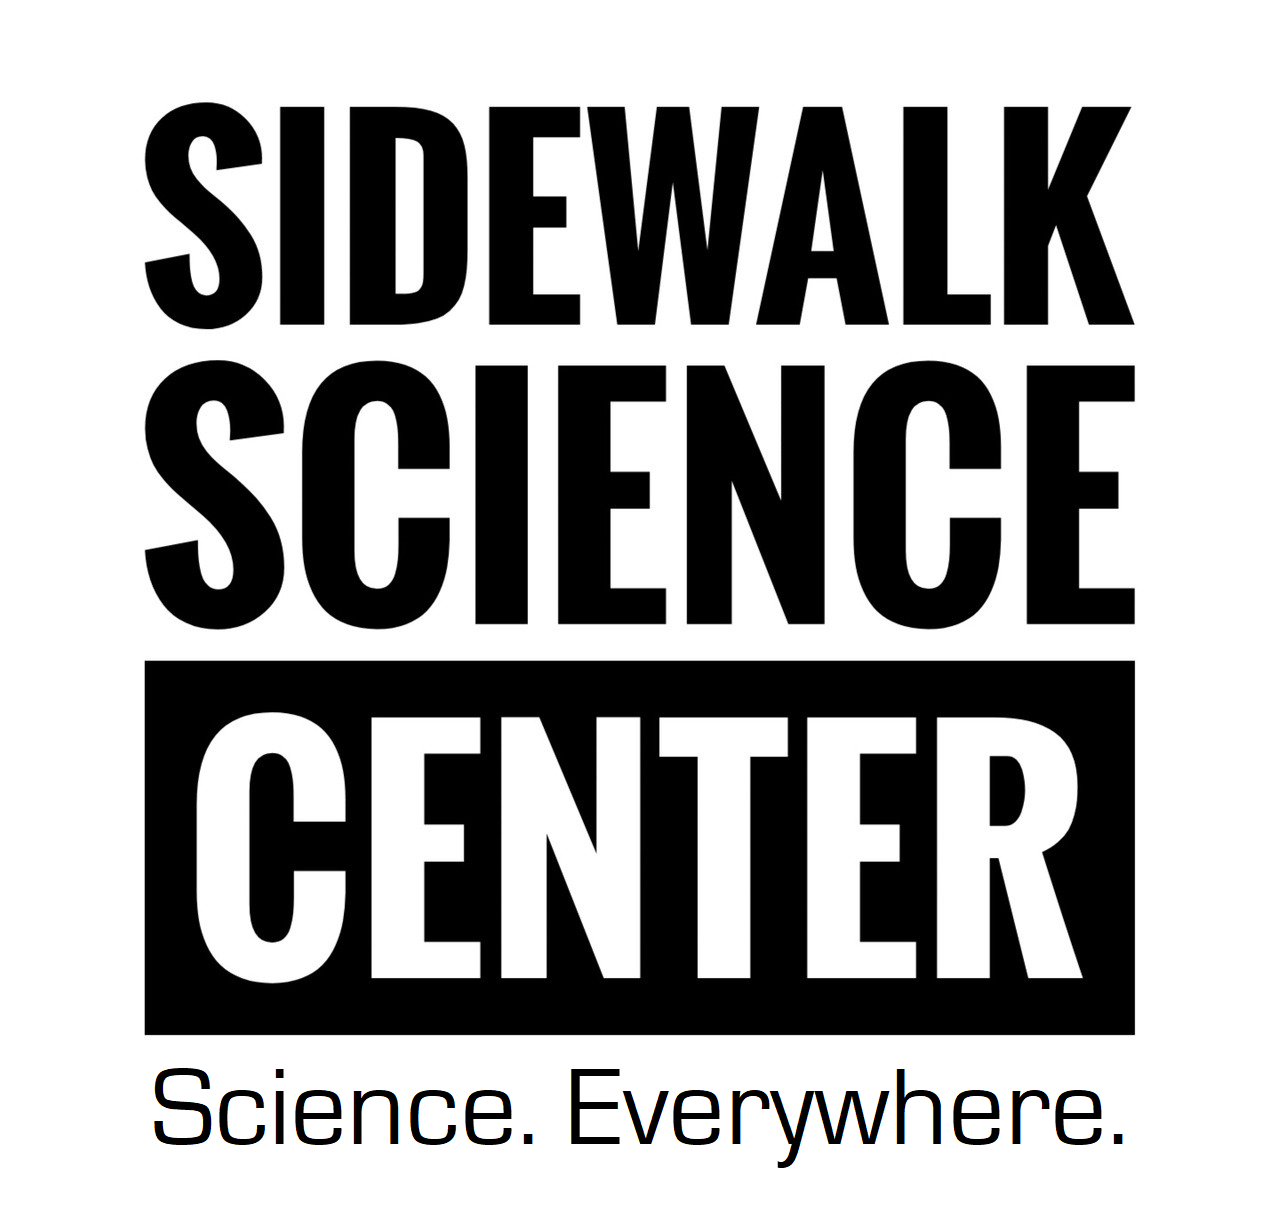 Sidewalk Science Center logo